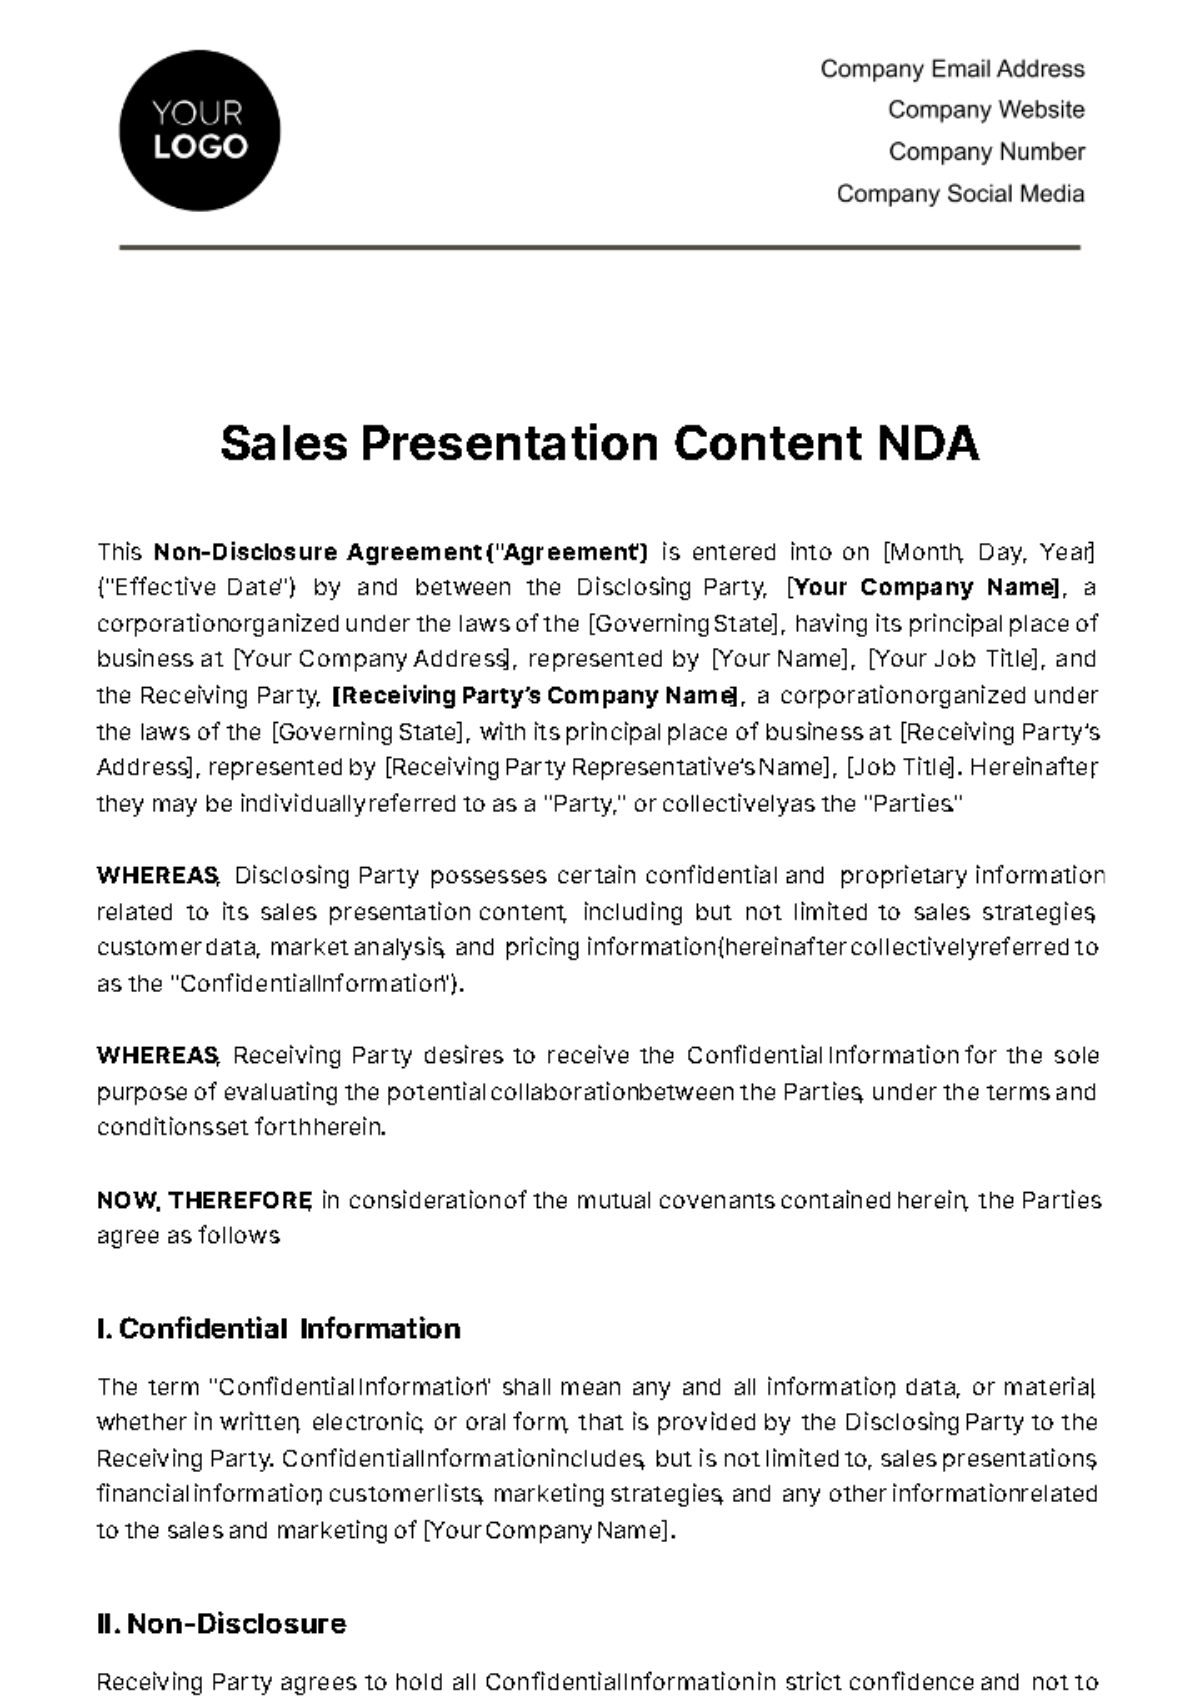 Free Sales Presentation Content NDA Template